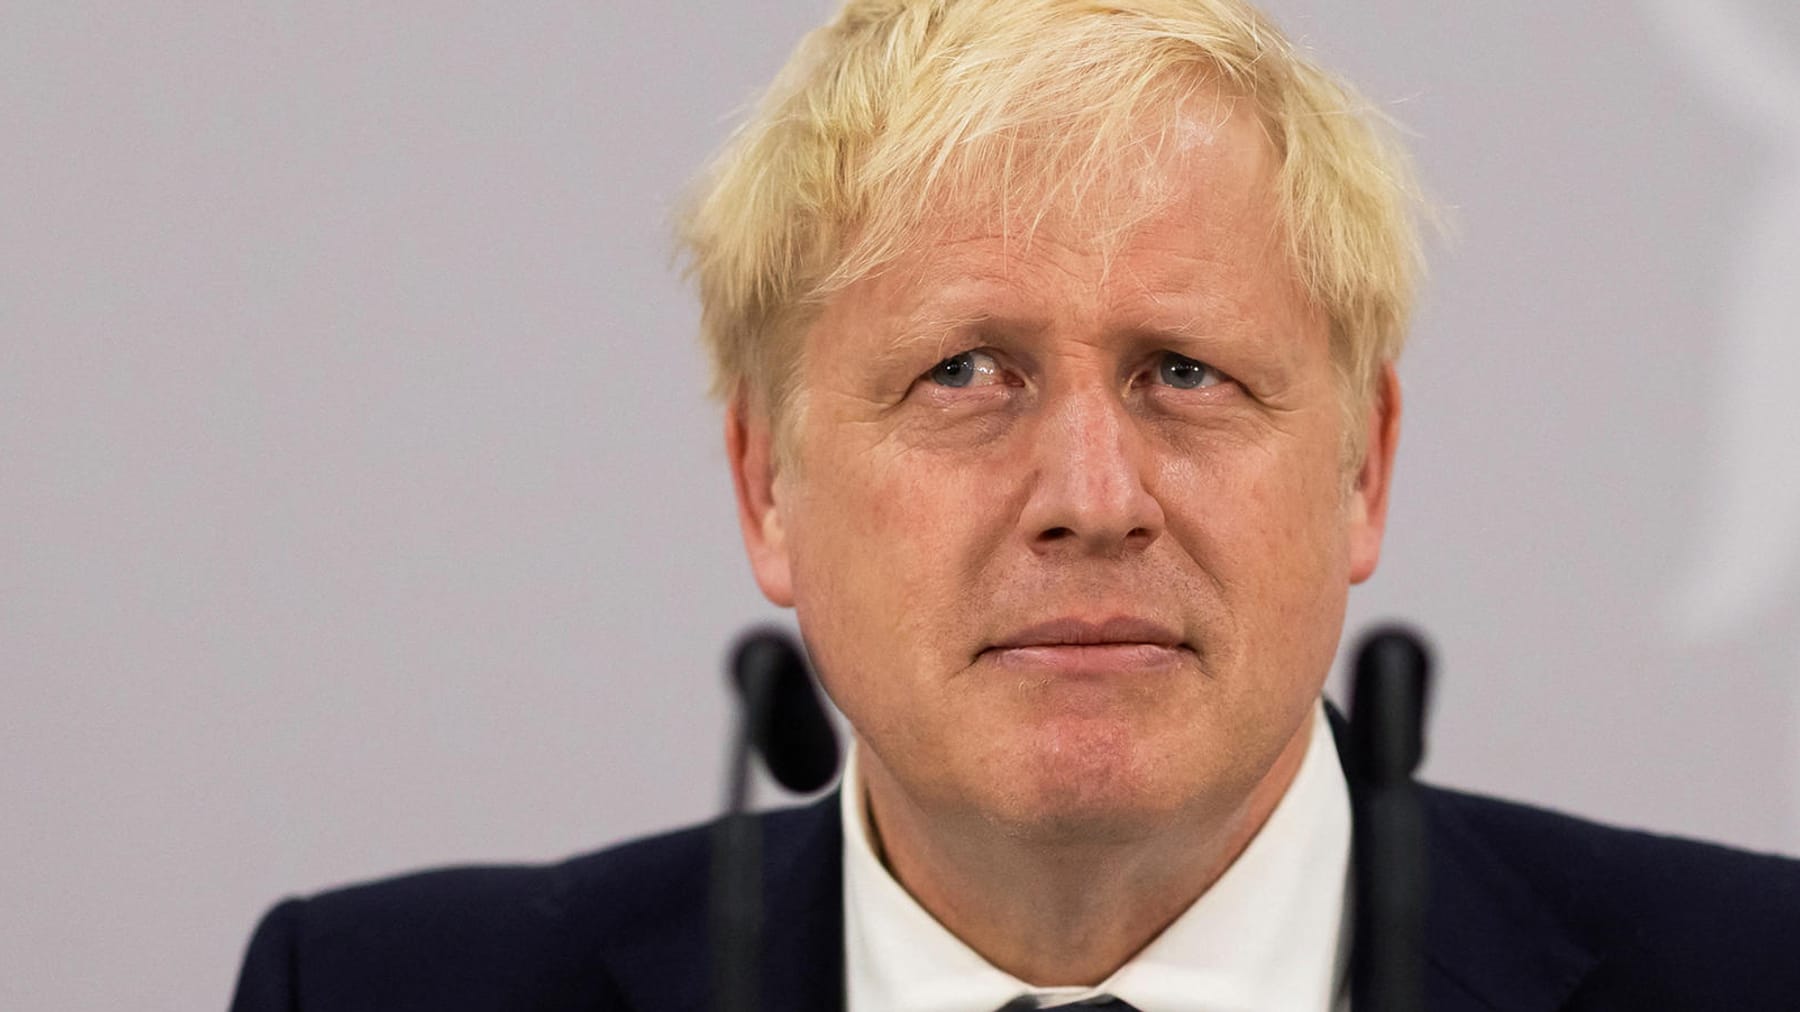 Boris Johnson irritates with statements about his mandate